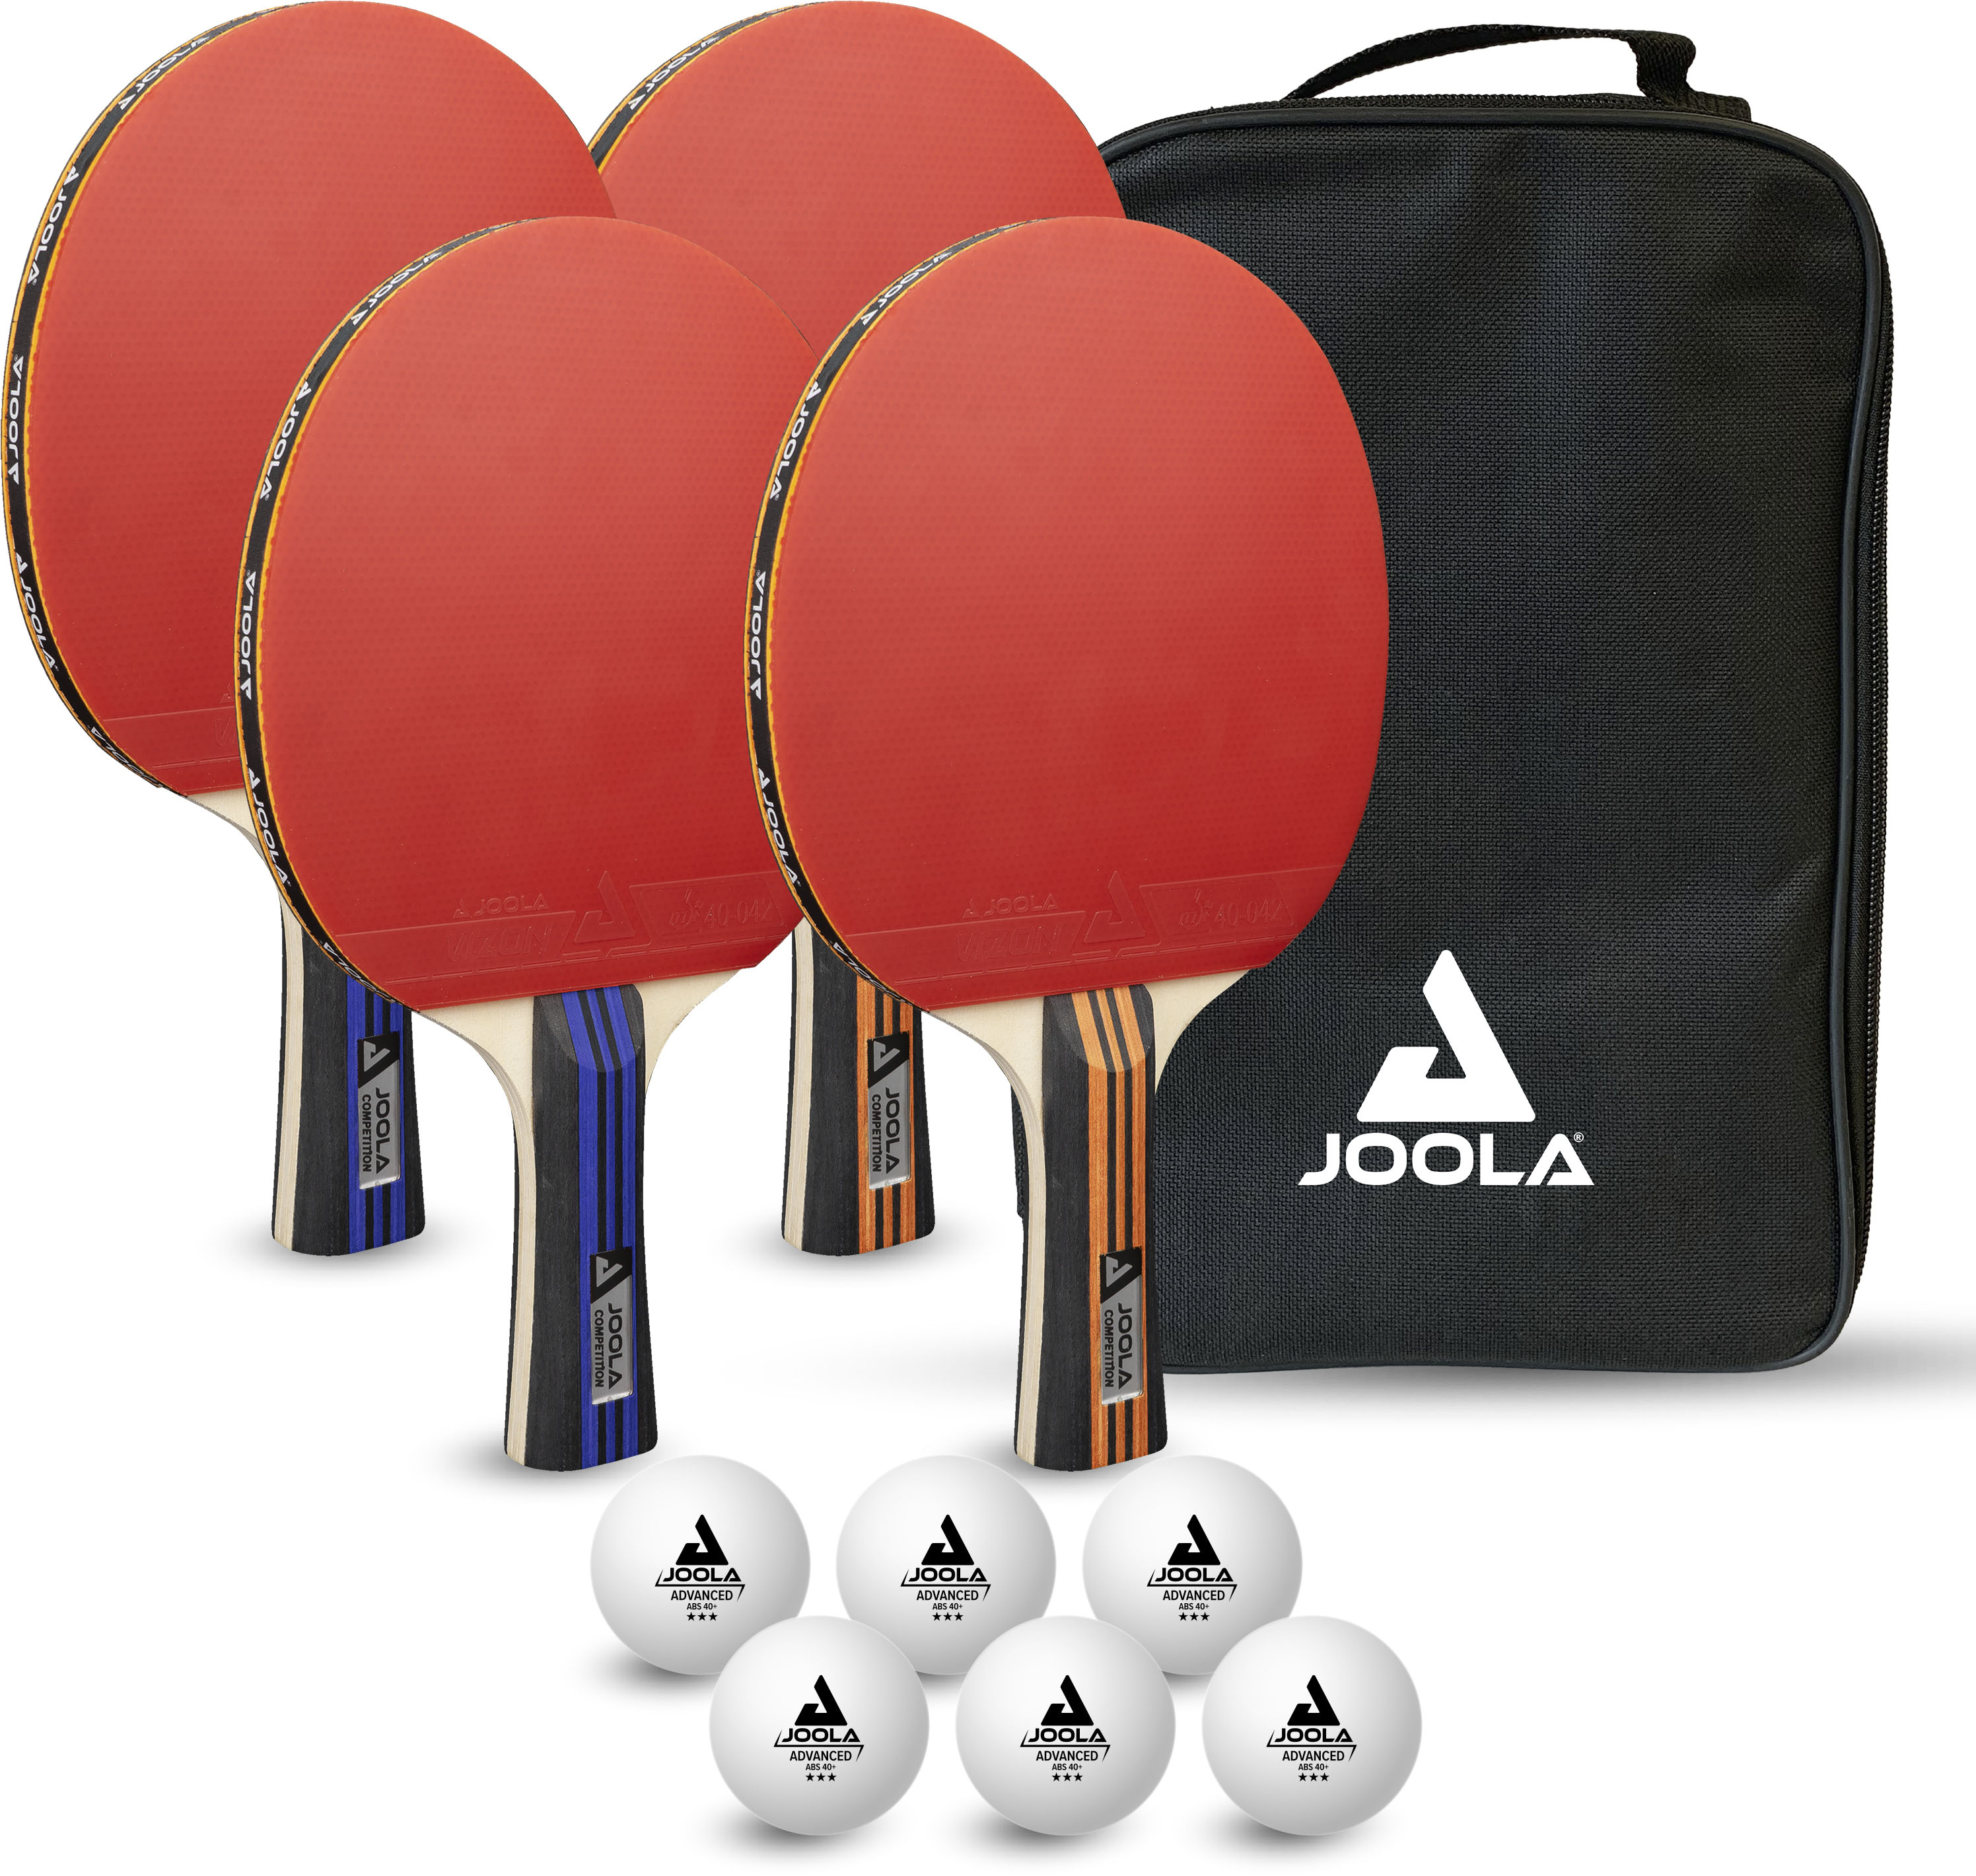 JOOLA Tischtennisset Family Advanced, 4 Tischtennisschläger + 6 Tischtennisbälle 3Star + Tragetasche, Advanced Level